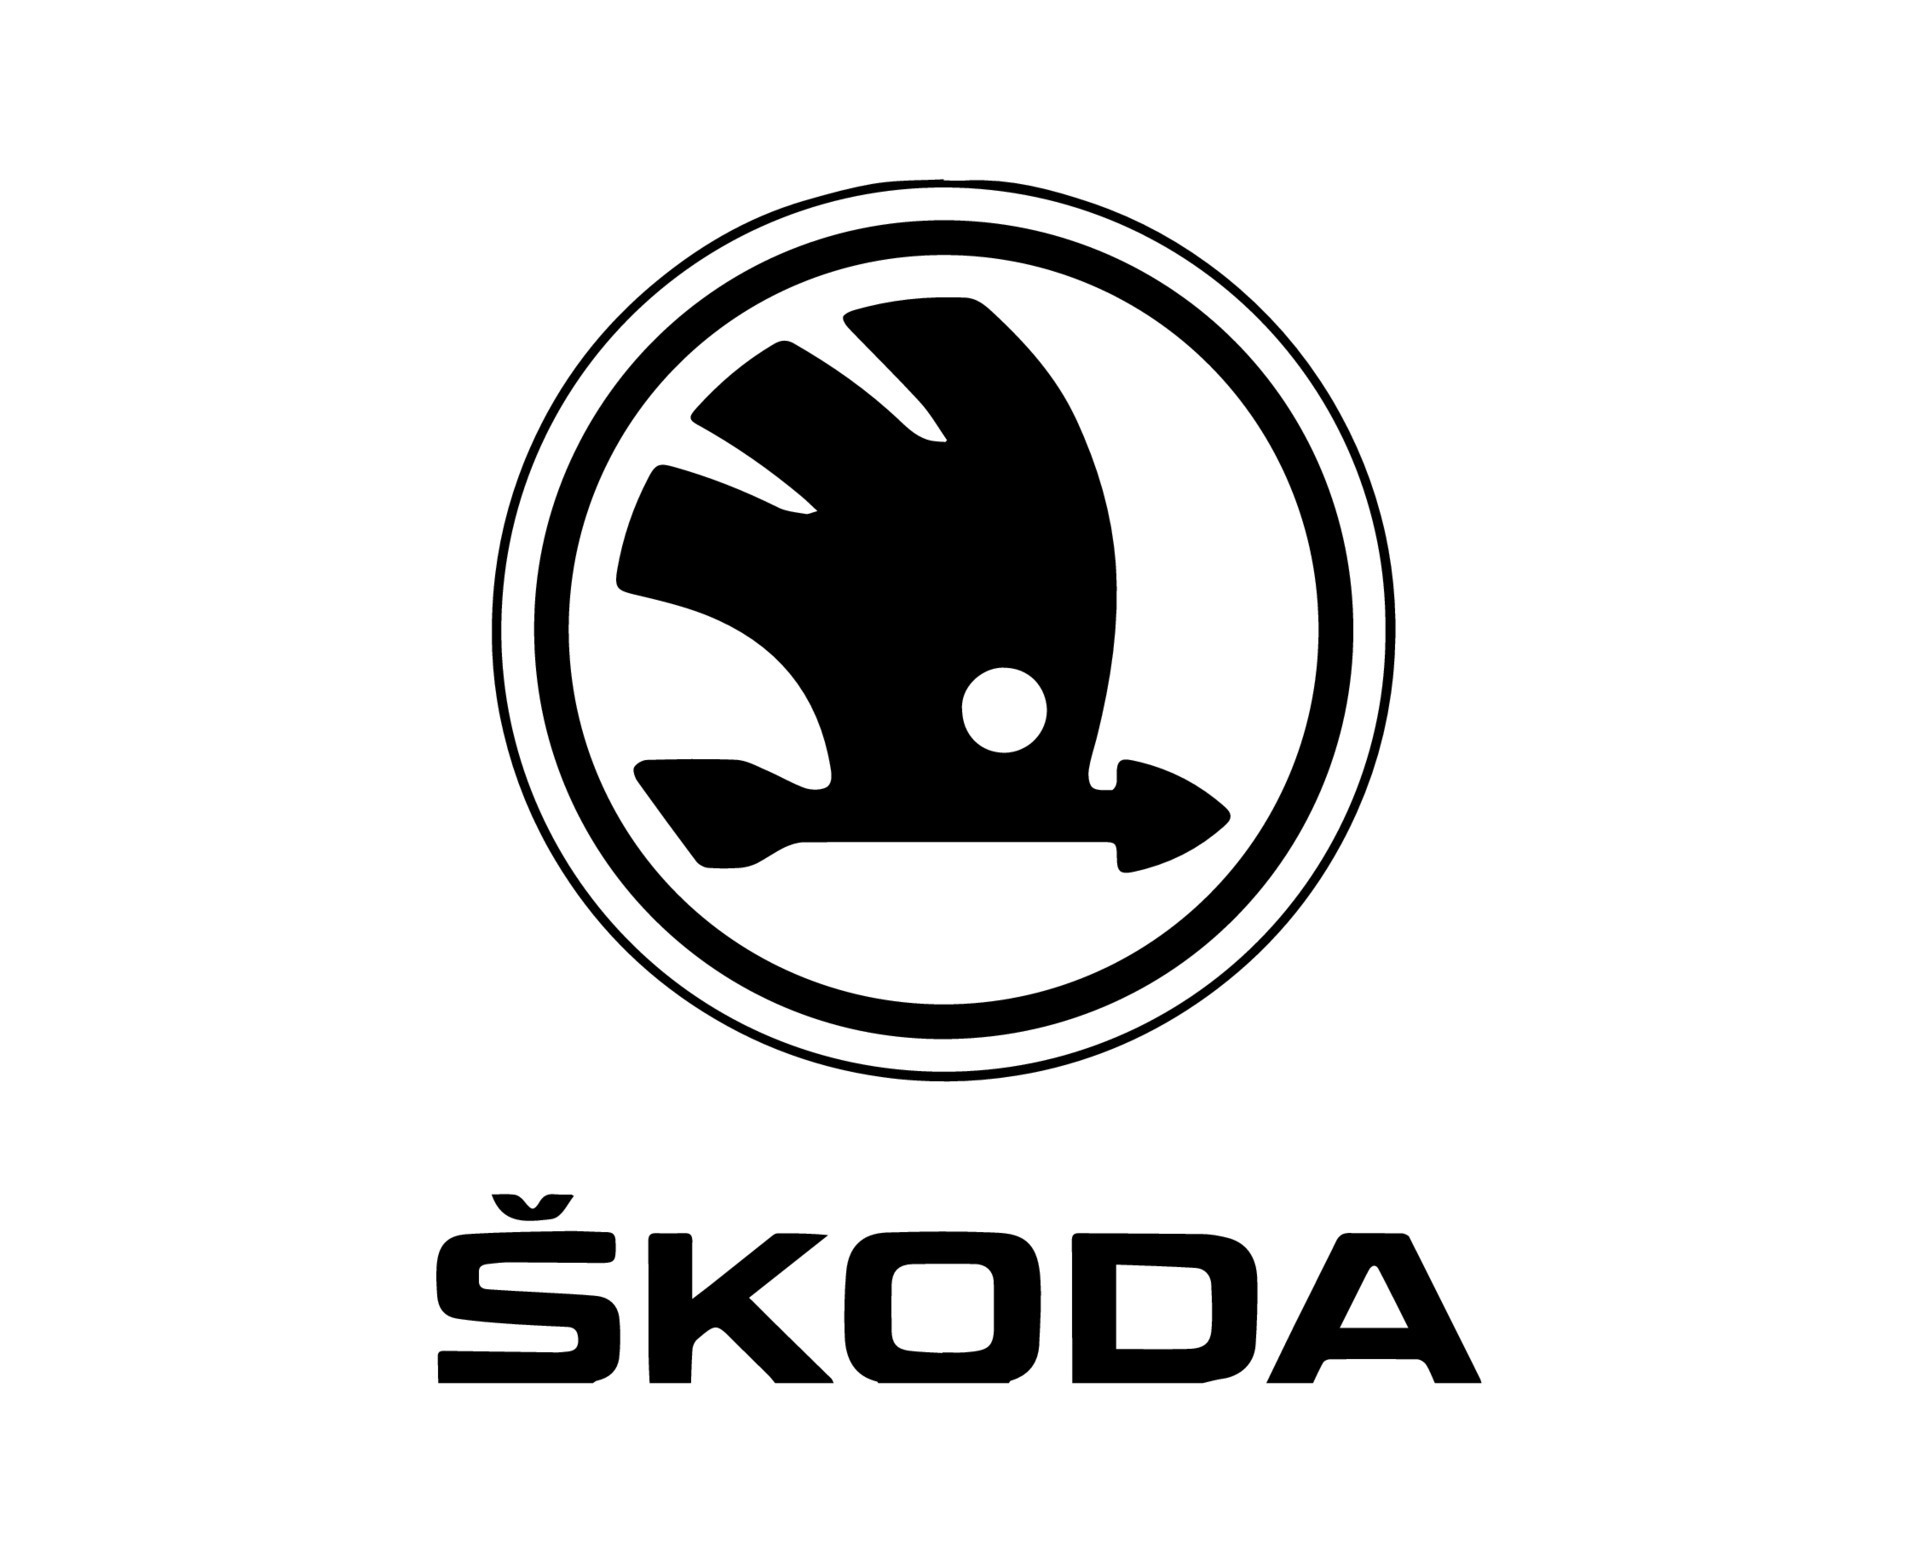 https://static.vecteezy.com/system/resources/previews/020/927/204/original/skoda-brand-logo-car-symbol-with-name-black-design-czech-automobile-illustration-free-vector.jpg